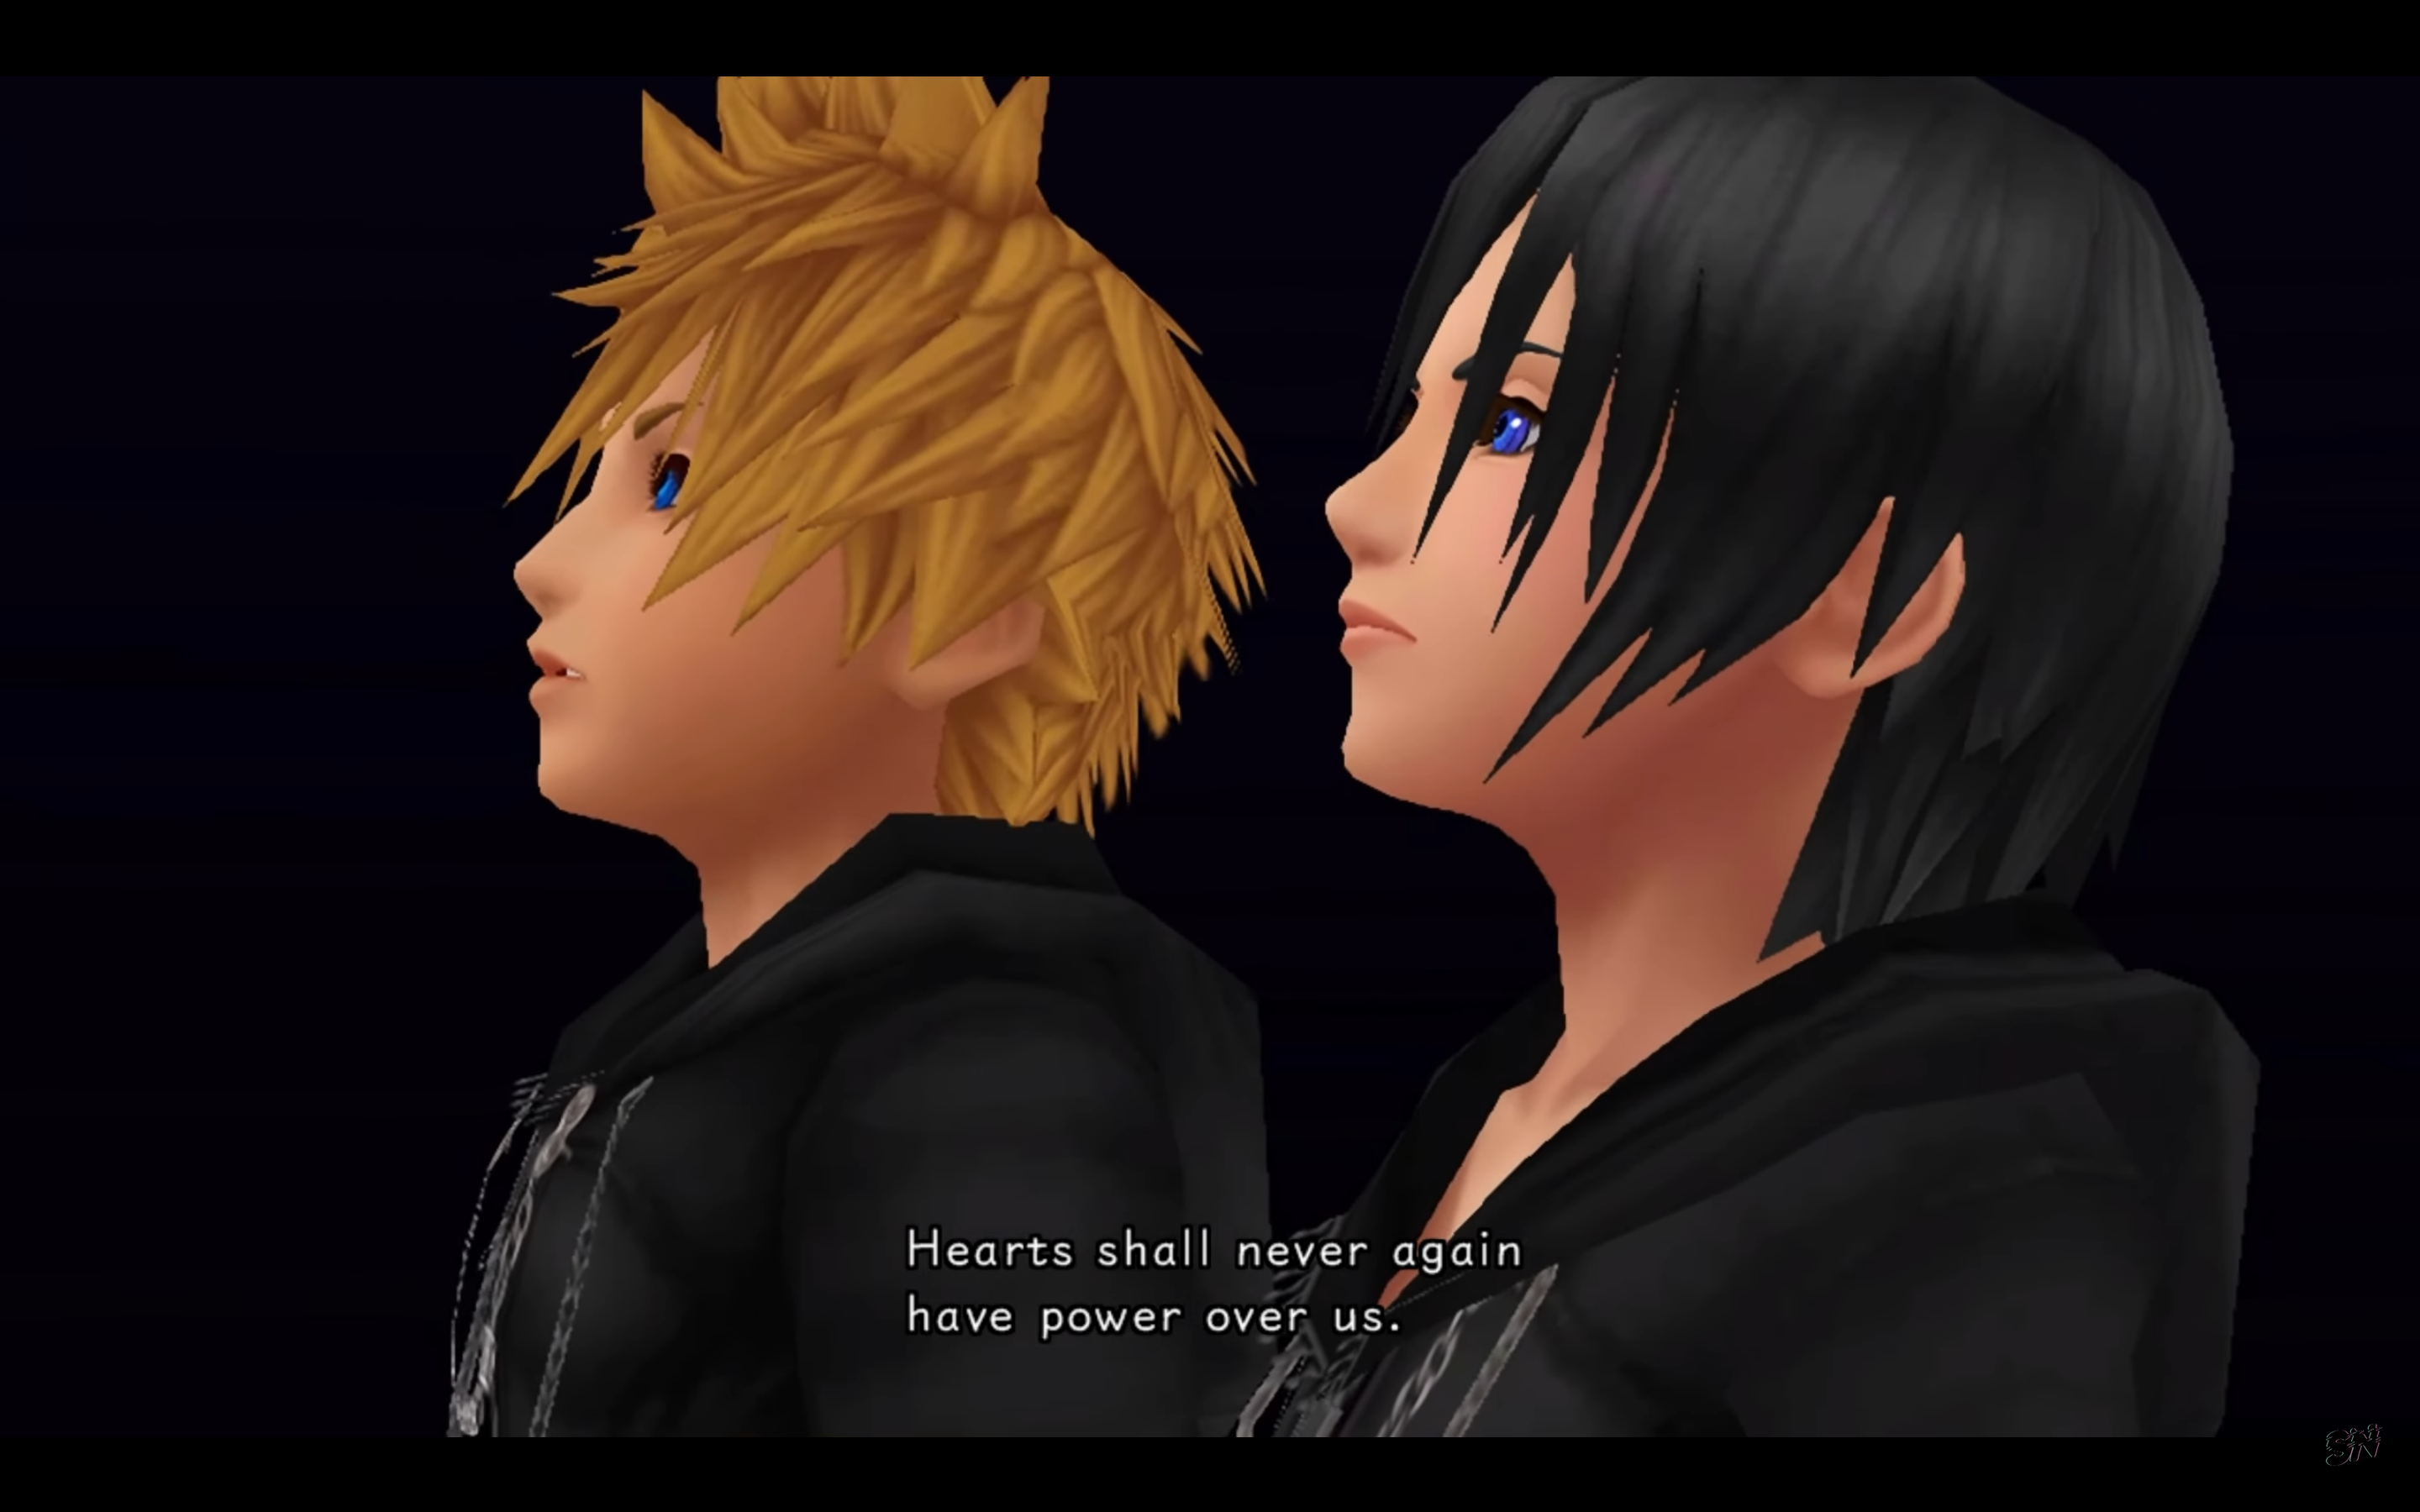 "Kingdom Hearts: 358/2 Days". 2009. Square Enix.
Roxas and Xion look up at Kingdom Hearts.